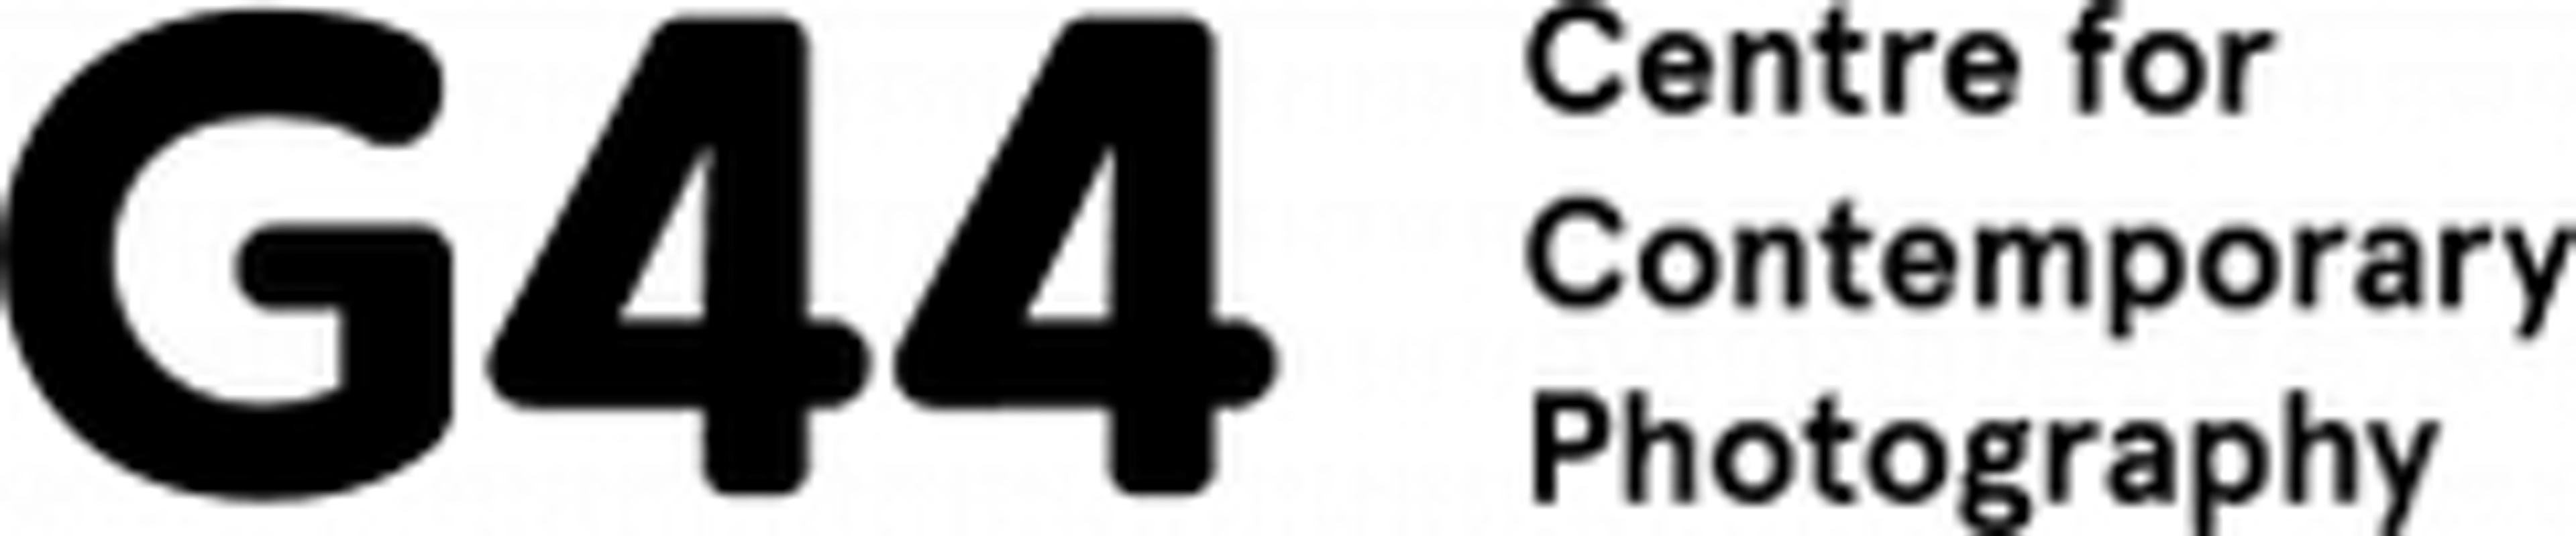 G44 logo